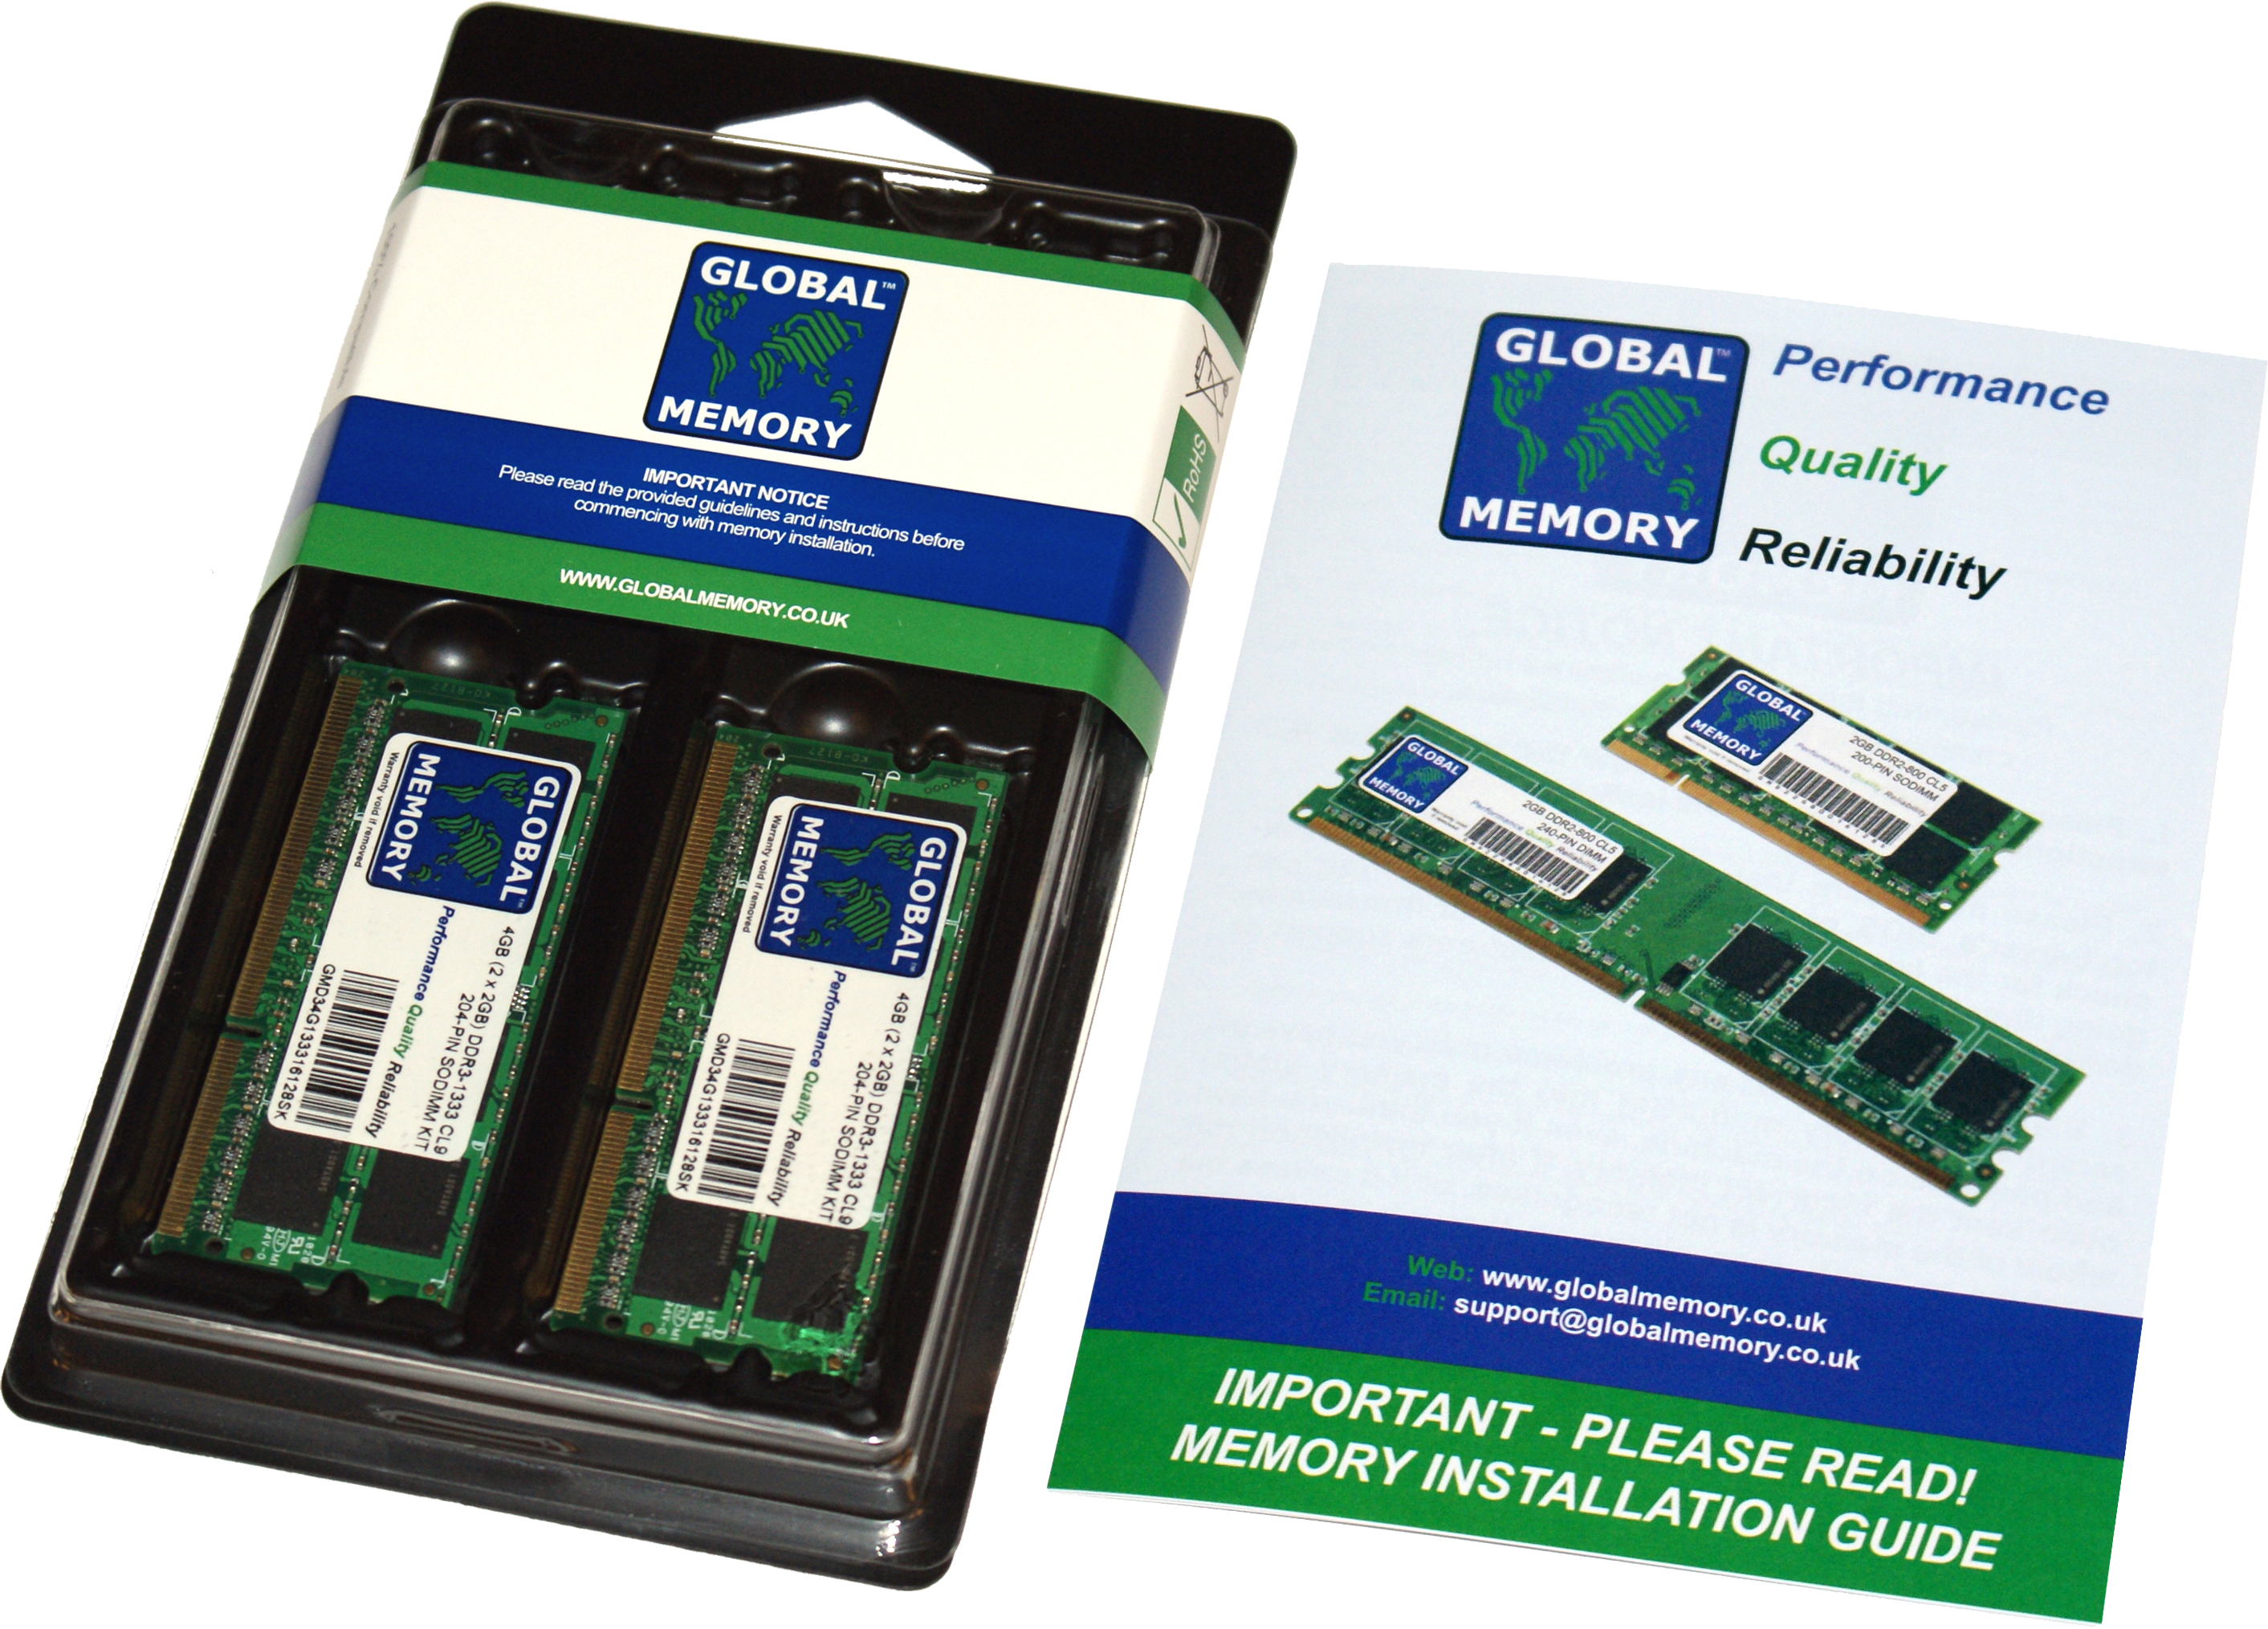 64GB (2 x 32GB) DDR4 2400MHz PC4-19200 260-PIN SODIMM MEMORY RAM KIT FOR LENOVO LAPTOPS/NOTEBOOKS